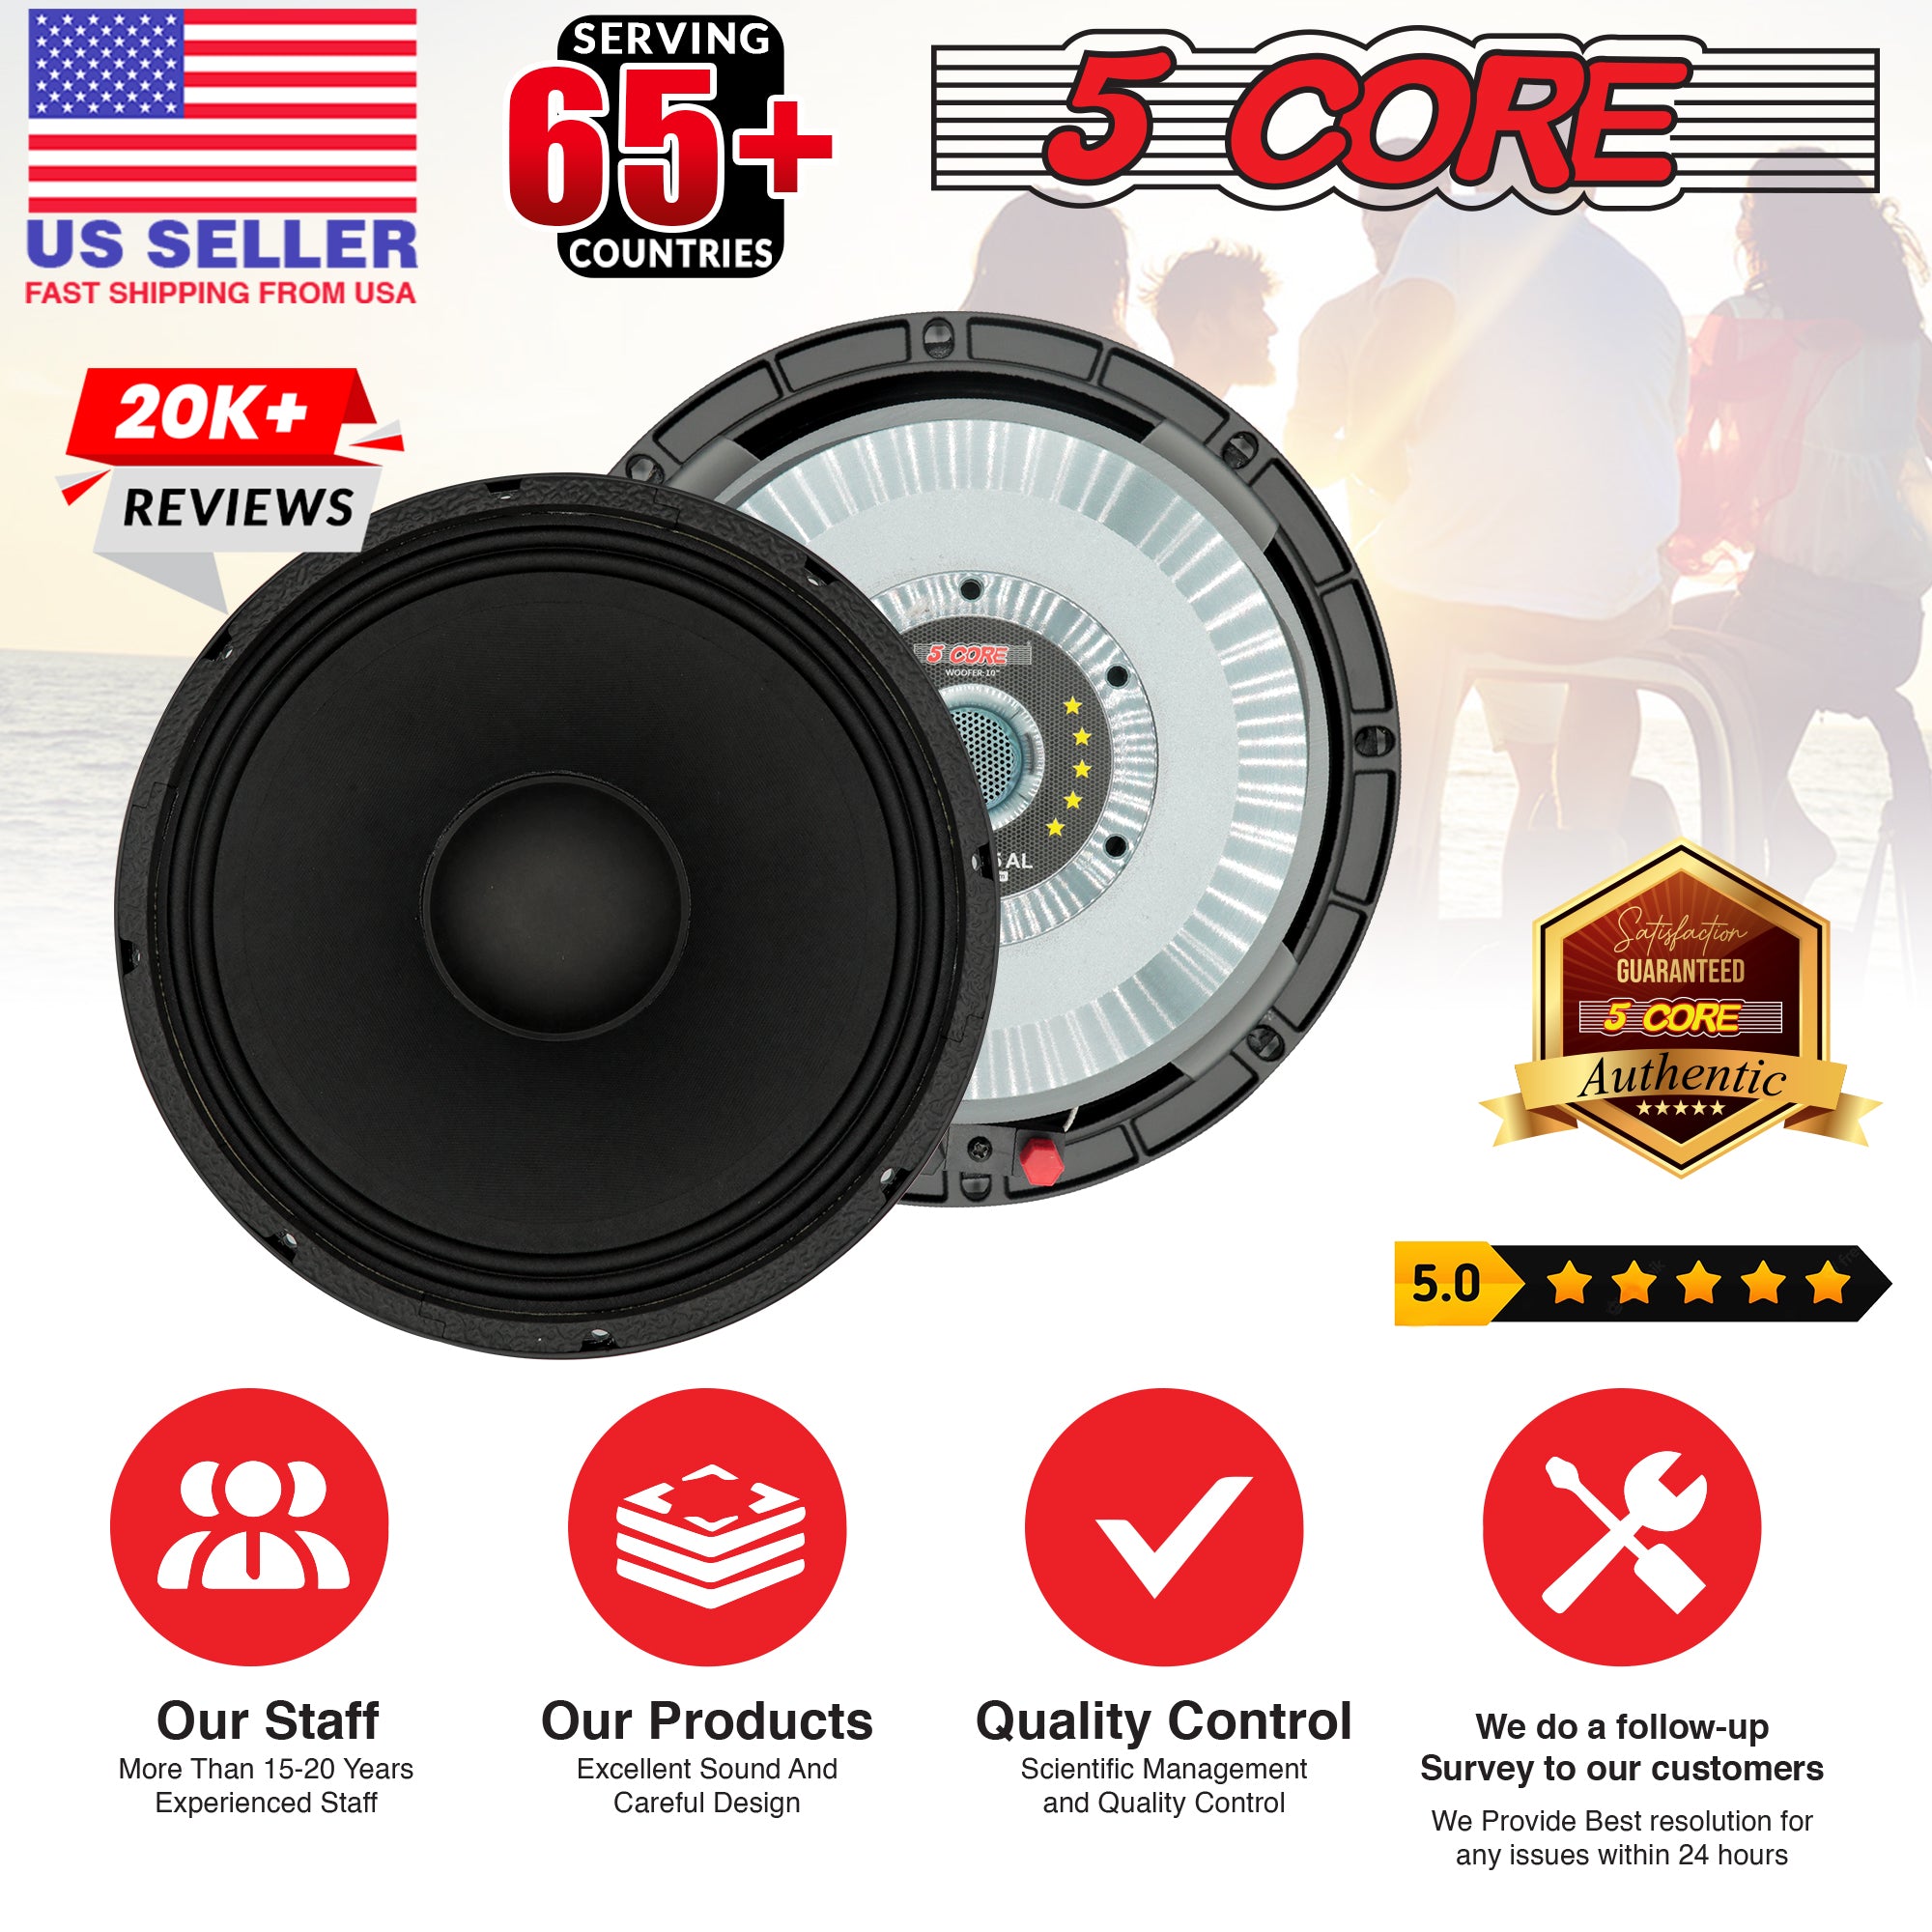 5Core 10 Inch Subwoofer Speaker 600W Max 8 Ohm Fullrange Replacement DJ Bass Sub Woofer Loudspeaker